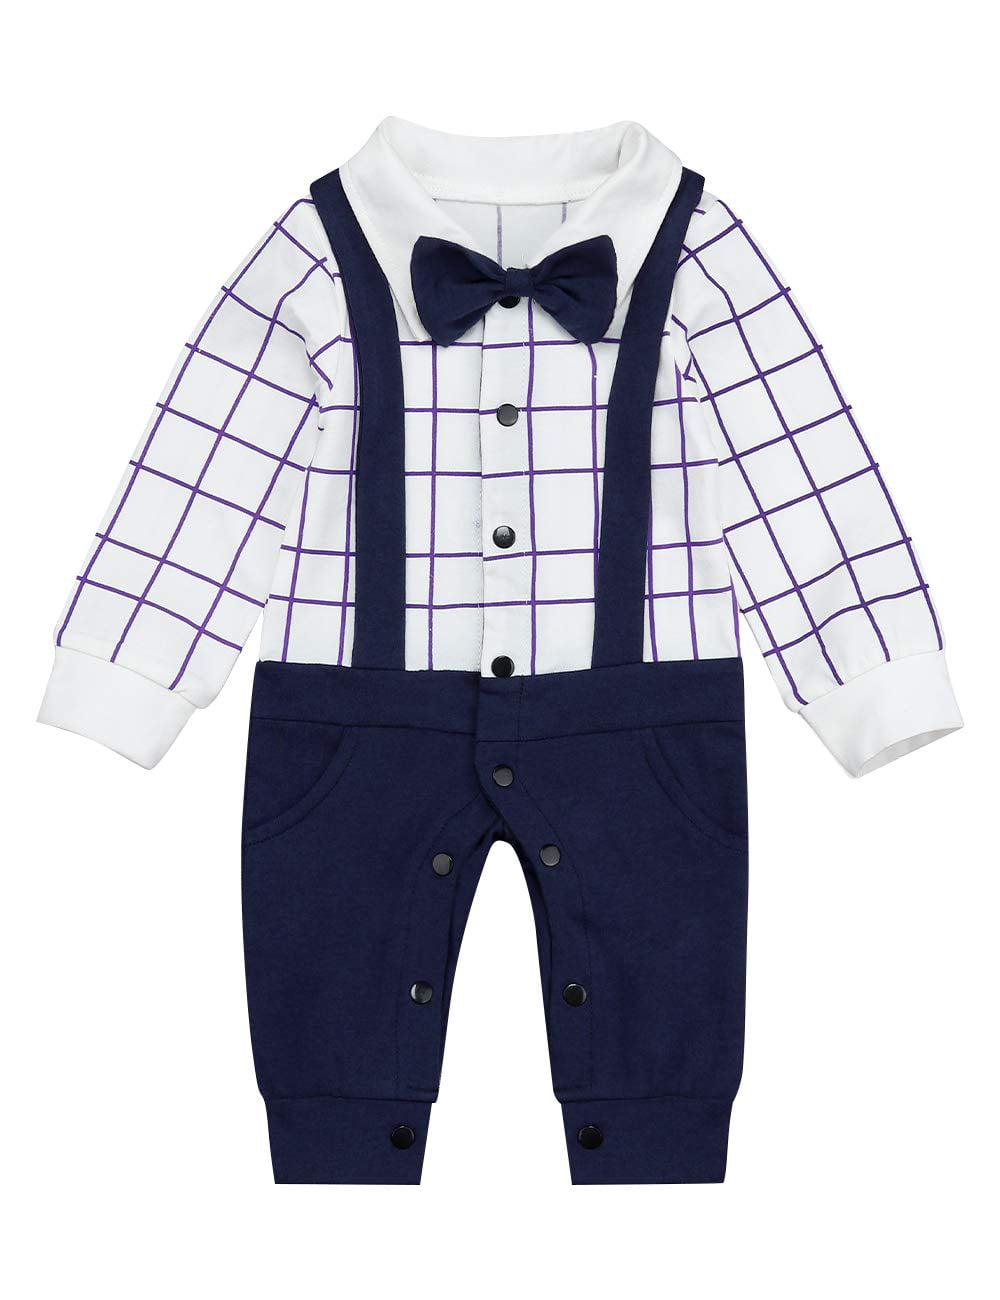 Newborn Boys Gentleman Romper One-Piece Baby Tuxedo Formal Suit Wedding Outfit